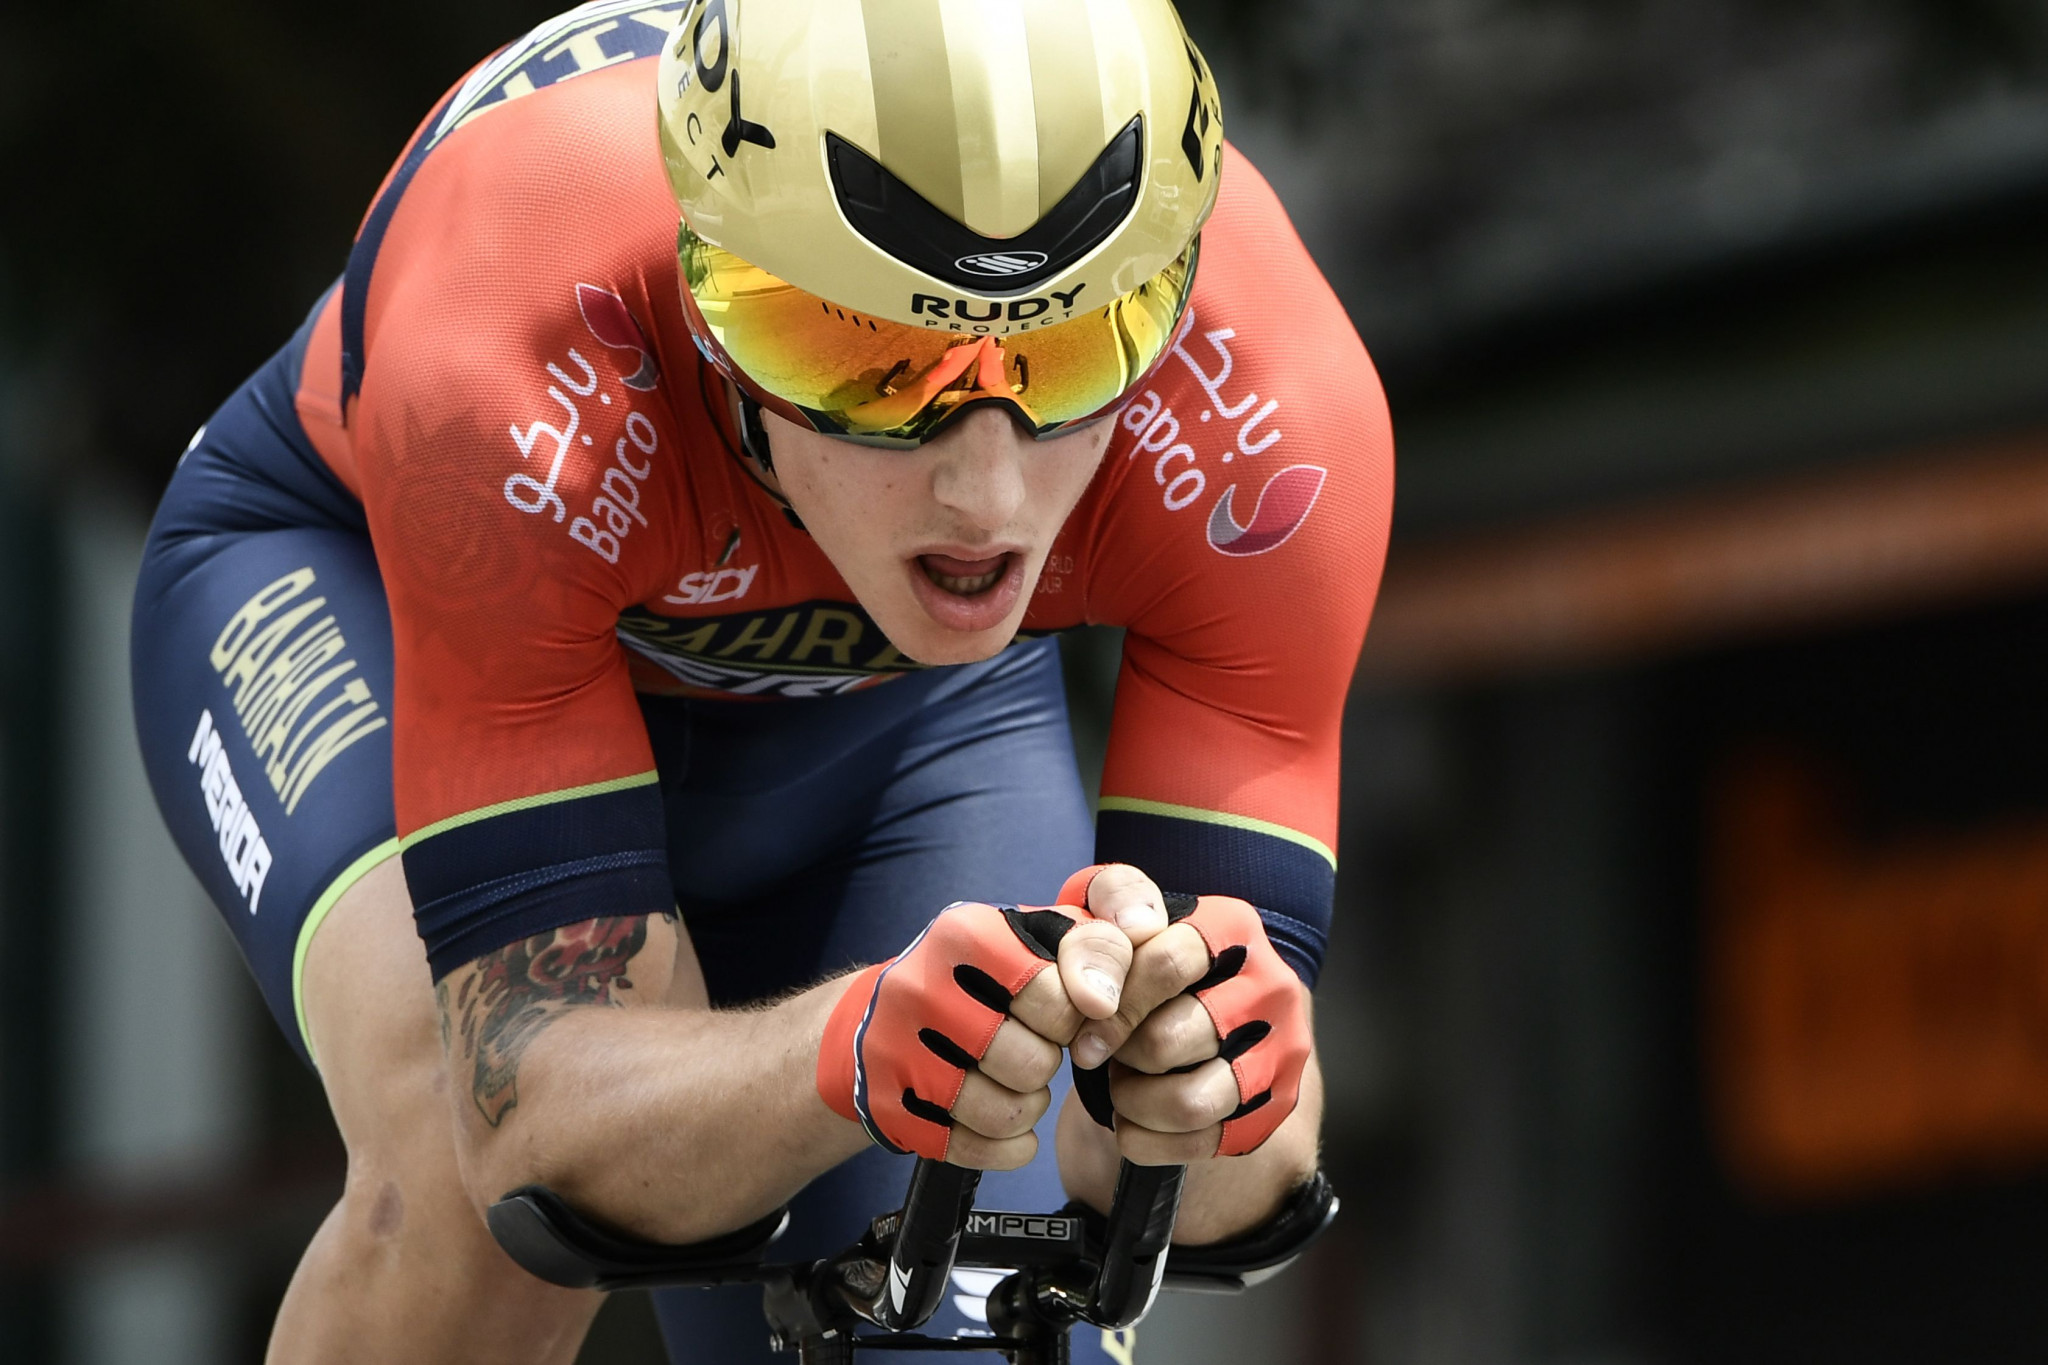 García Cortina wins Tour of California fifth stage as officials labelled “incompetent” over leader van Garderen’s reinstatement